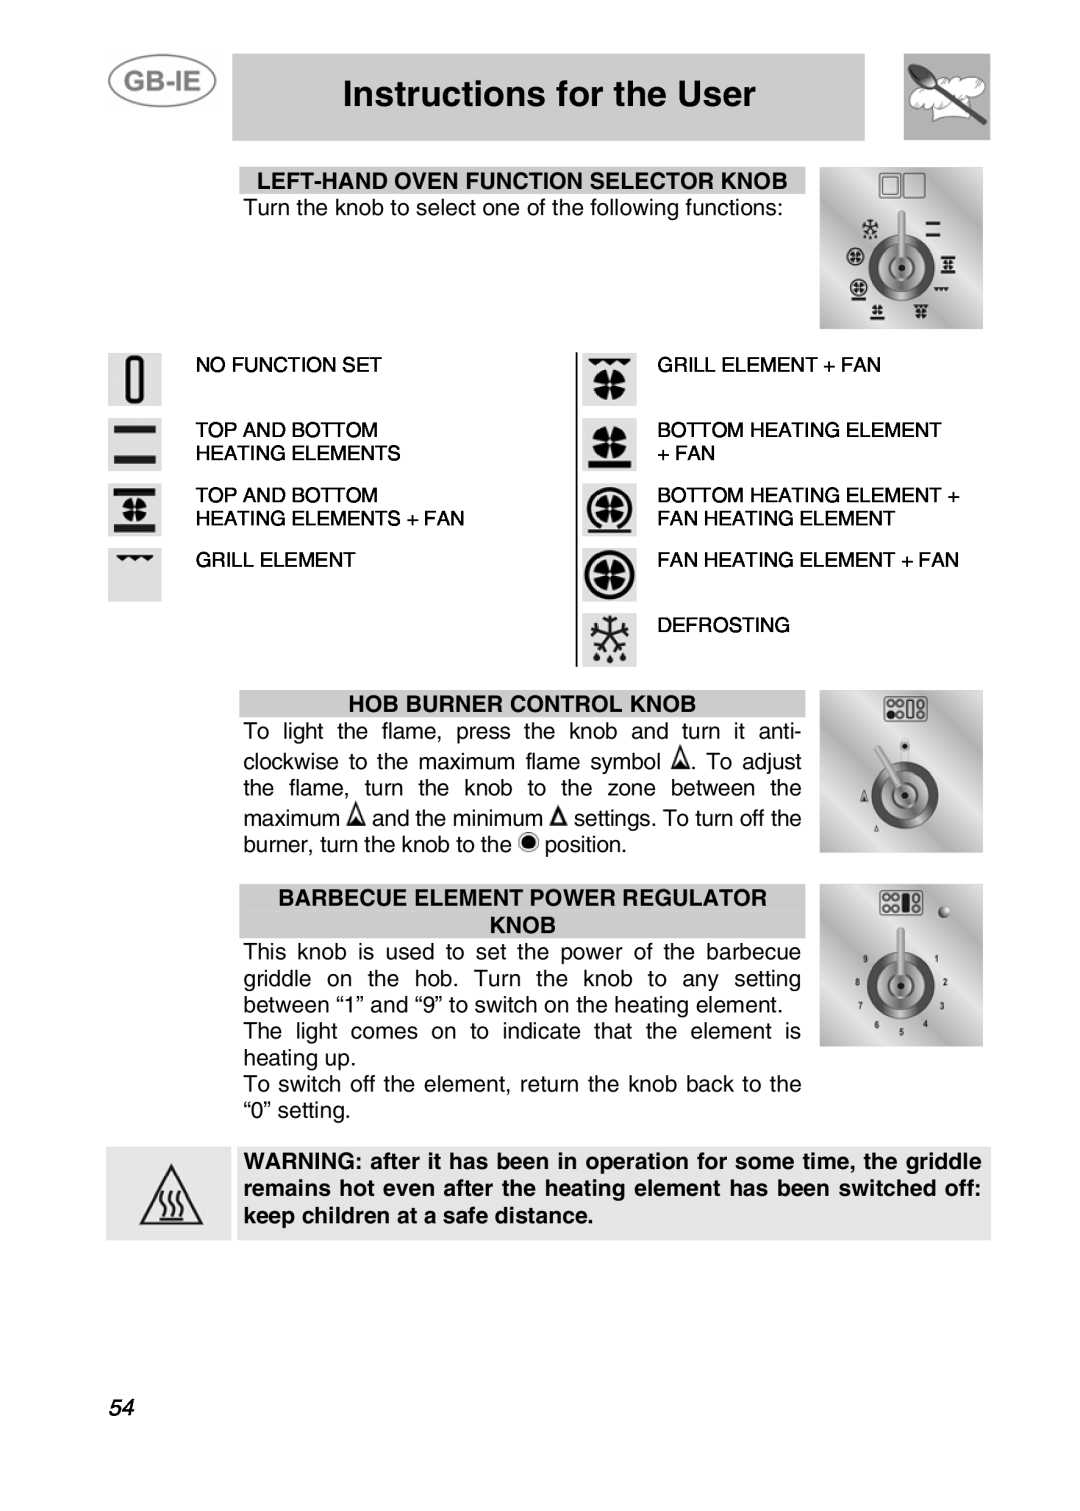 Smeg A4-5 manual Left-Handoven Function Selector Knob, Hob Burner Control Knob, Barbecue Element Power Regulator Knob 